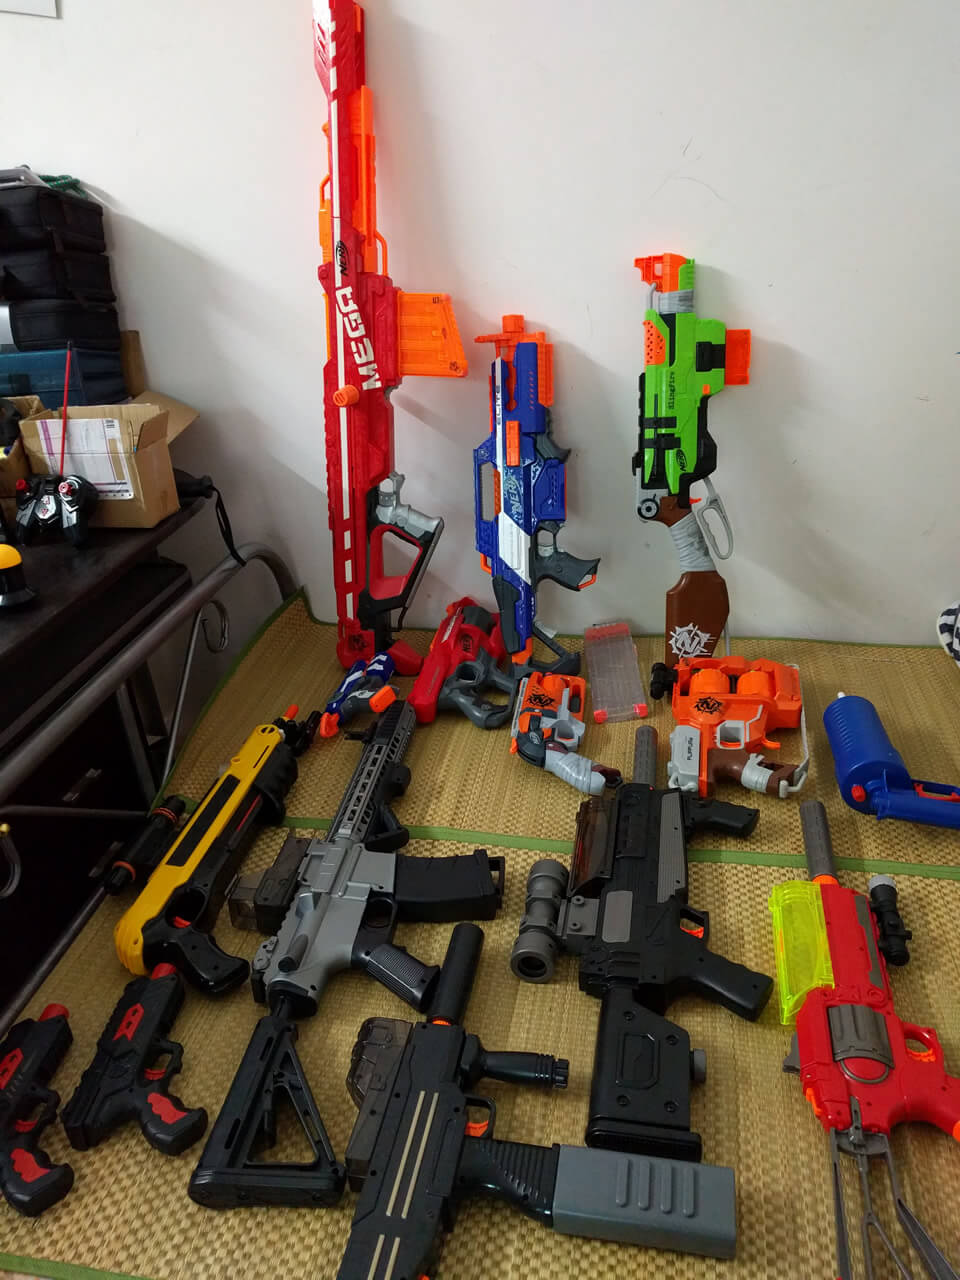 160421-toy-guns